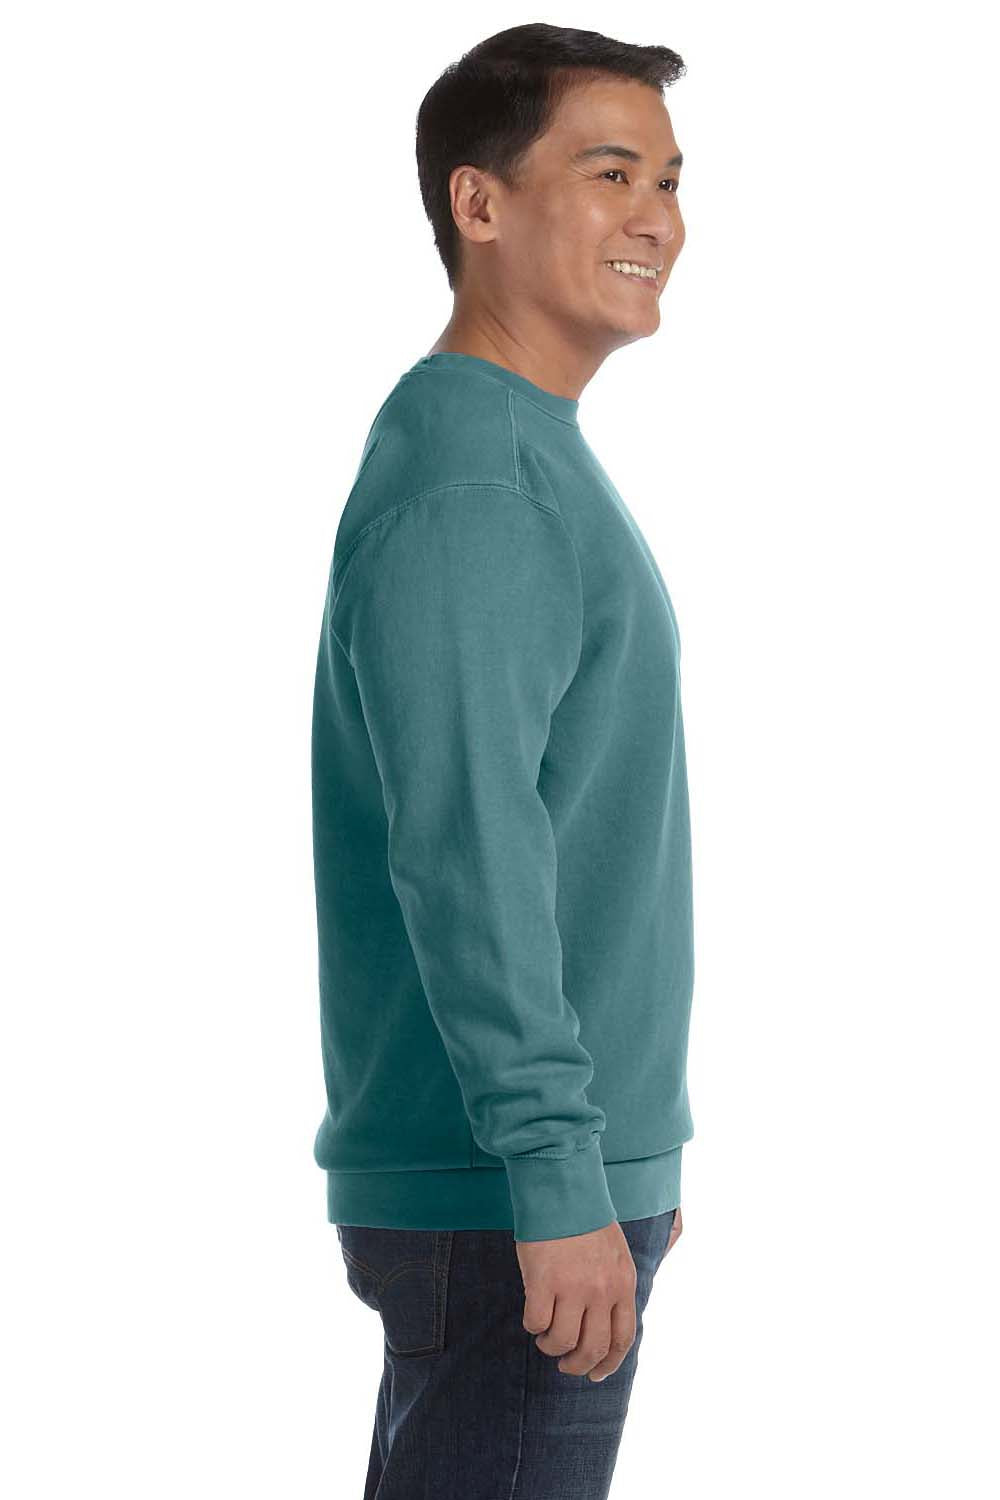 Comfort Colors 1566 Mens Crewneck Sweatshirt Blue Spruce Side